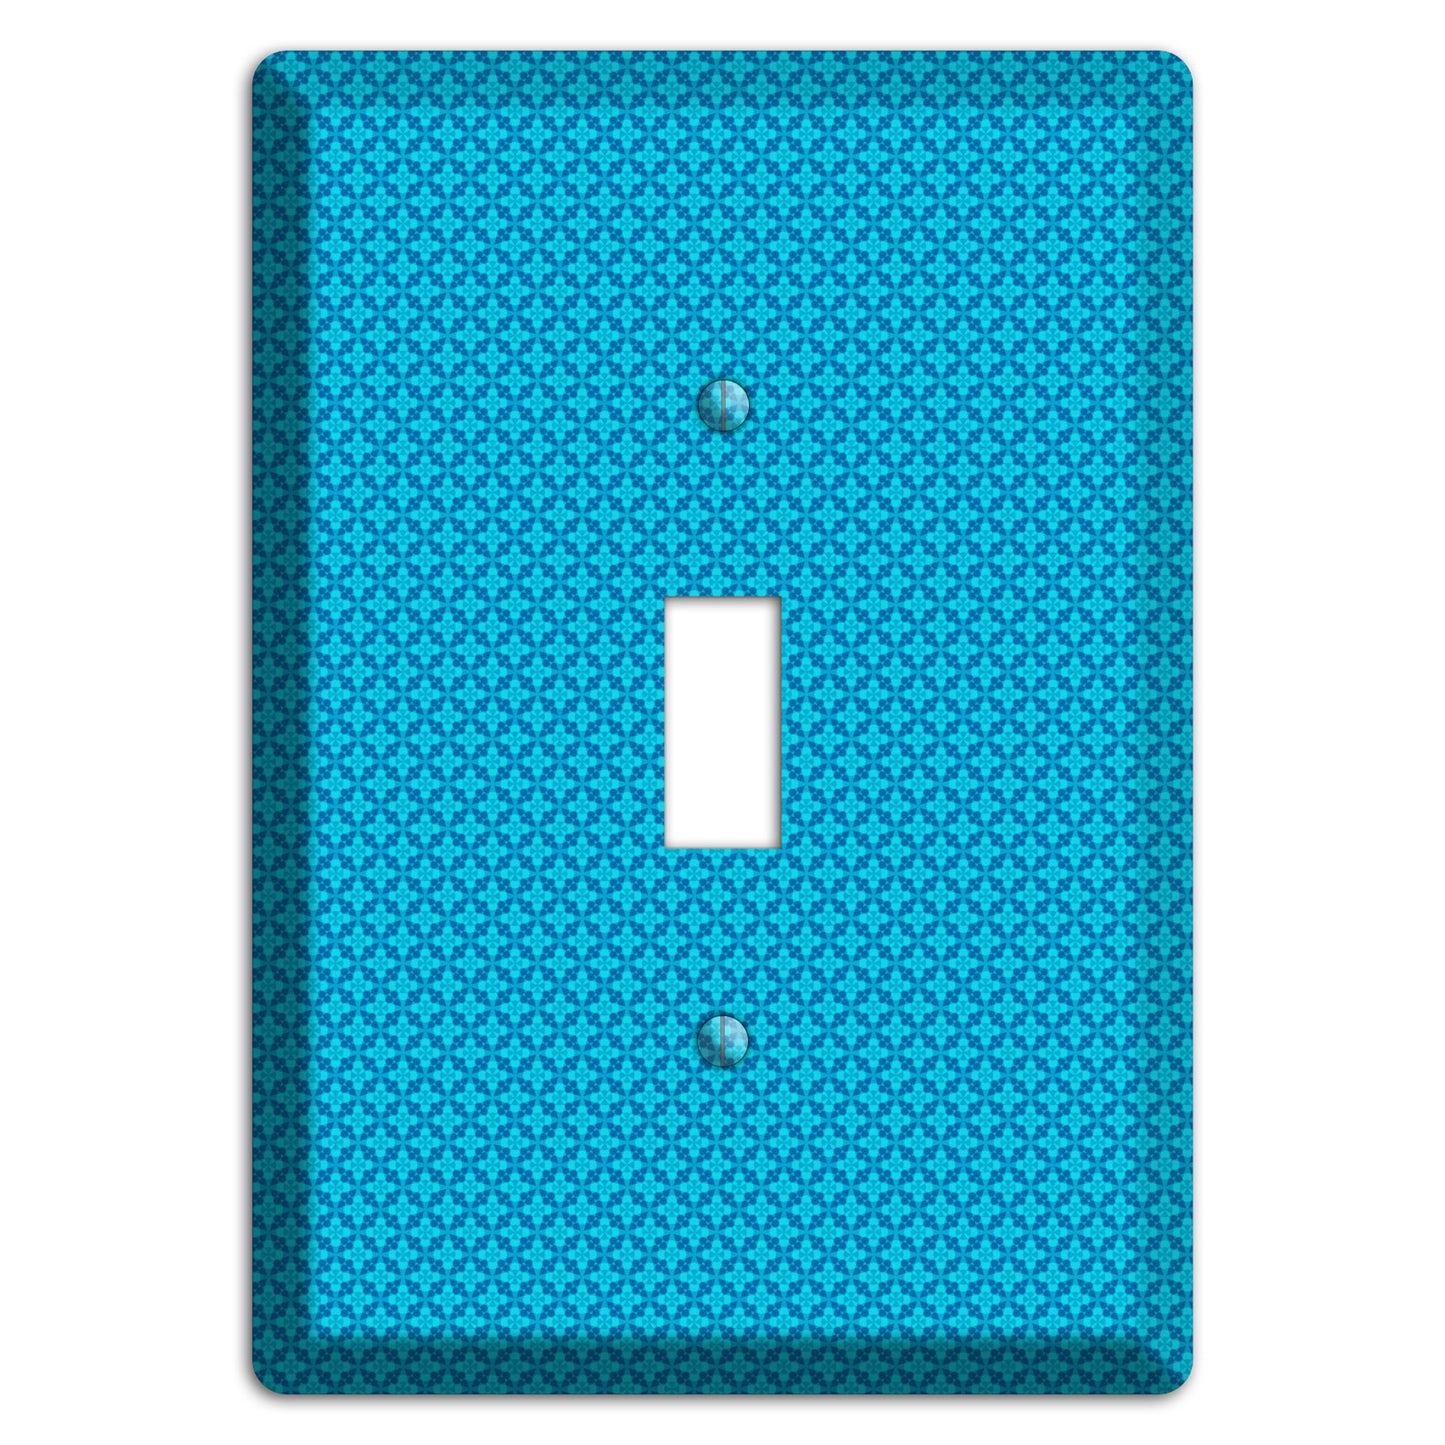 Multi Blue Checkered Quatrefoil Cover Plates